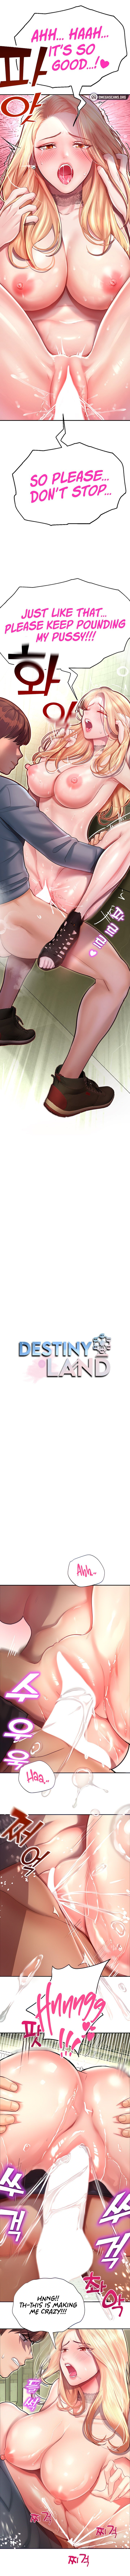 destiny-land-chap-8-1